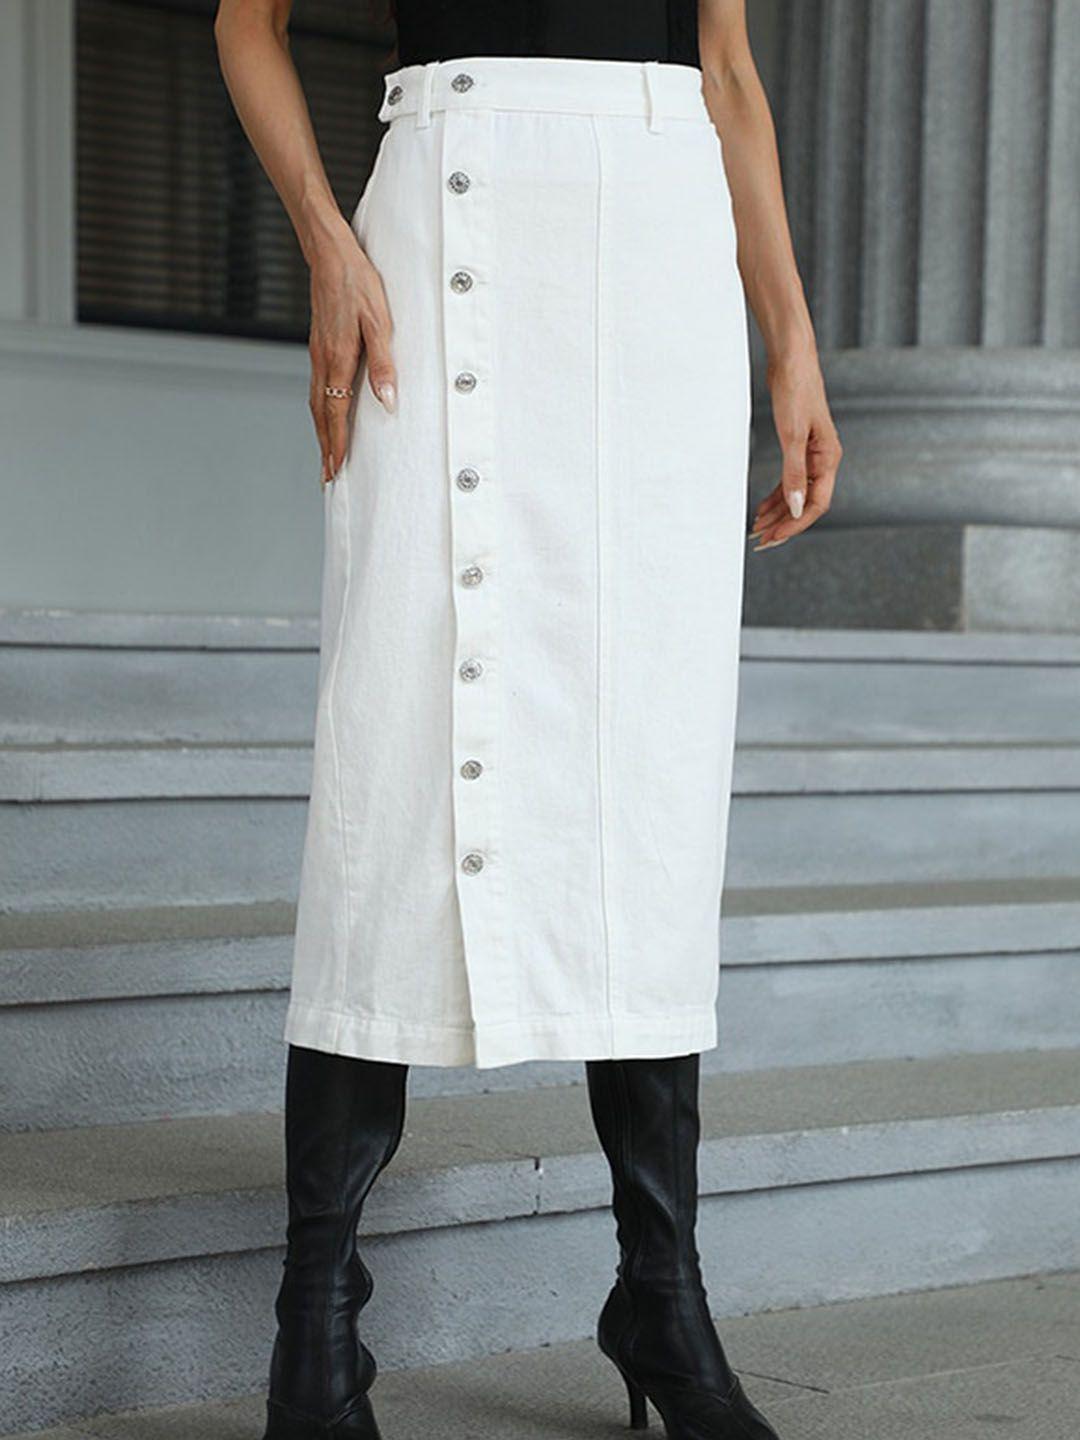 stylecast white a-line midi skirt